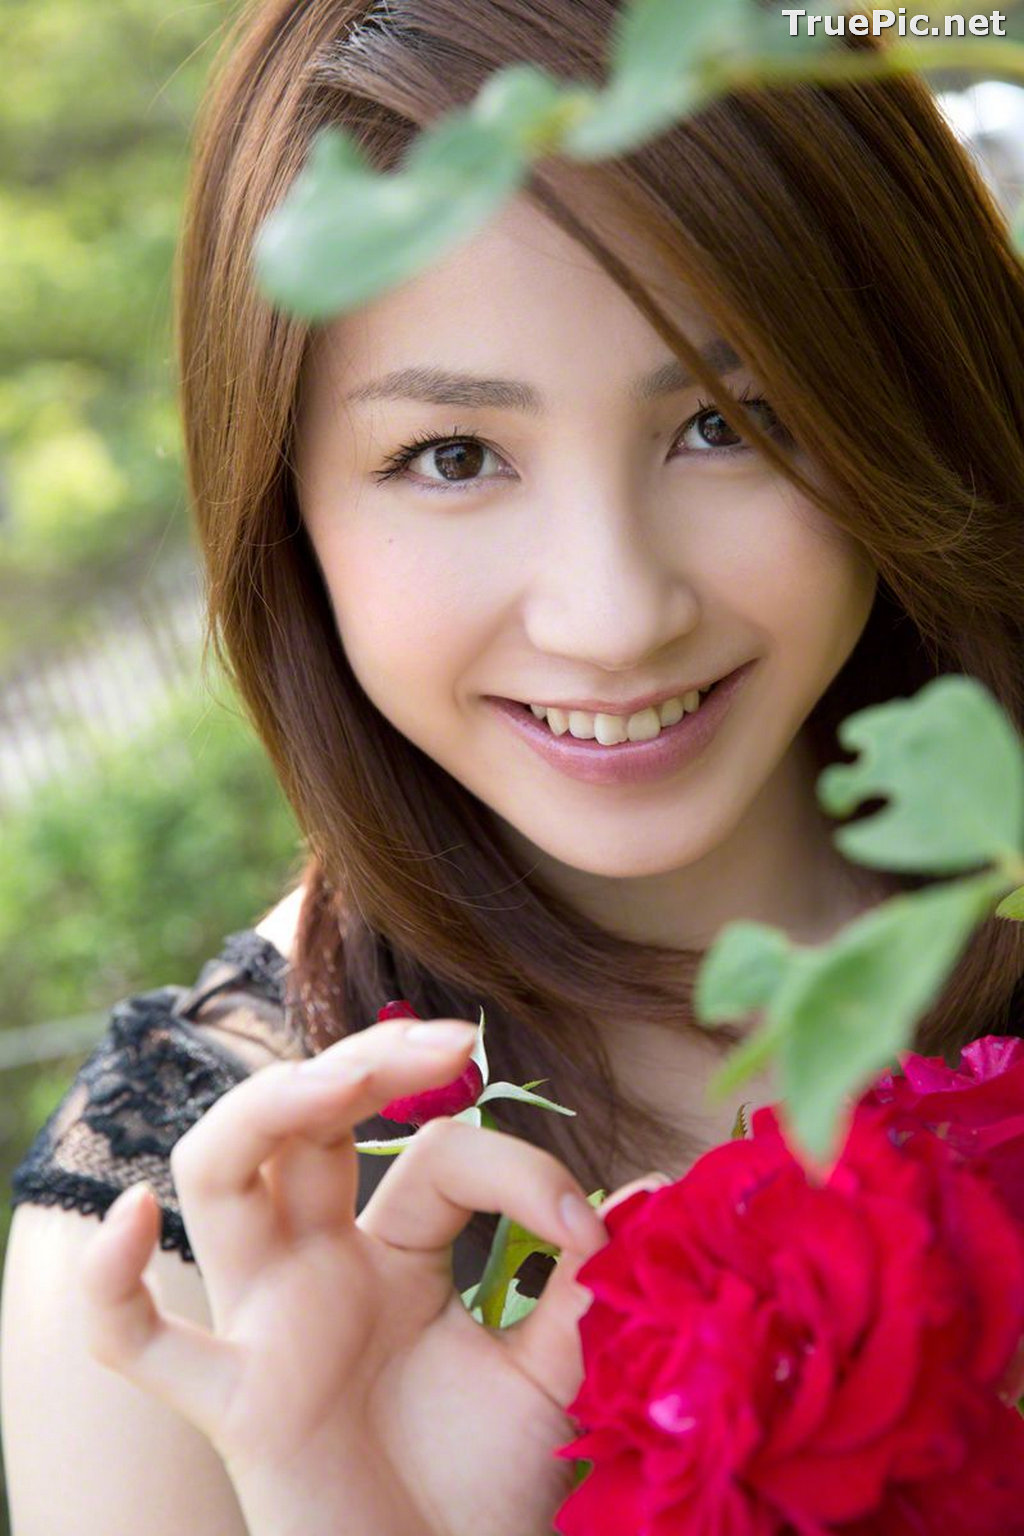 Image [Wanibooks Jacket] No.129 - Japanese Singer and Actress - You Kikkawa - TruePic.net - Picture-186